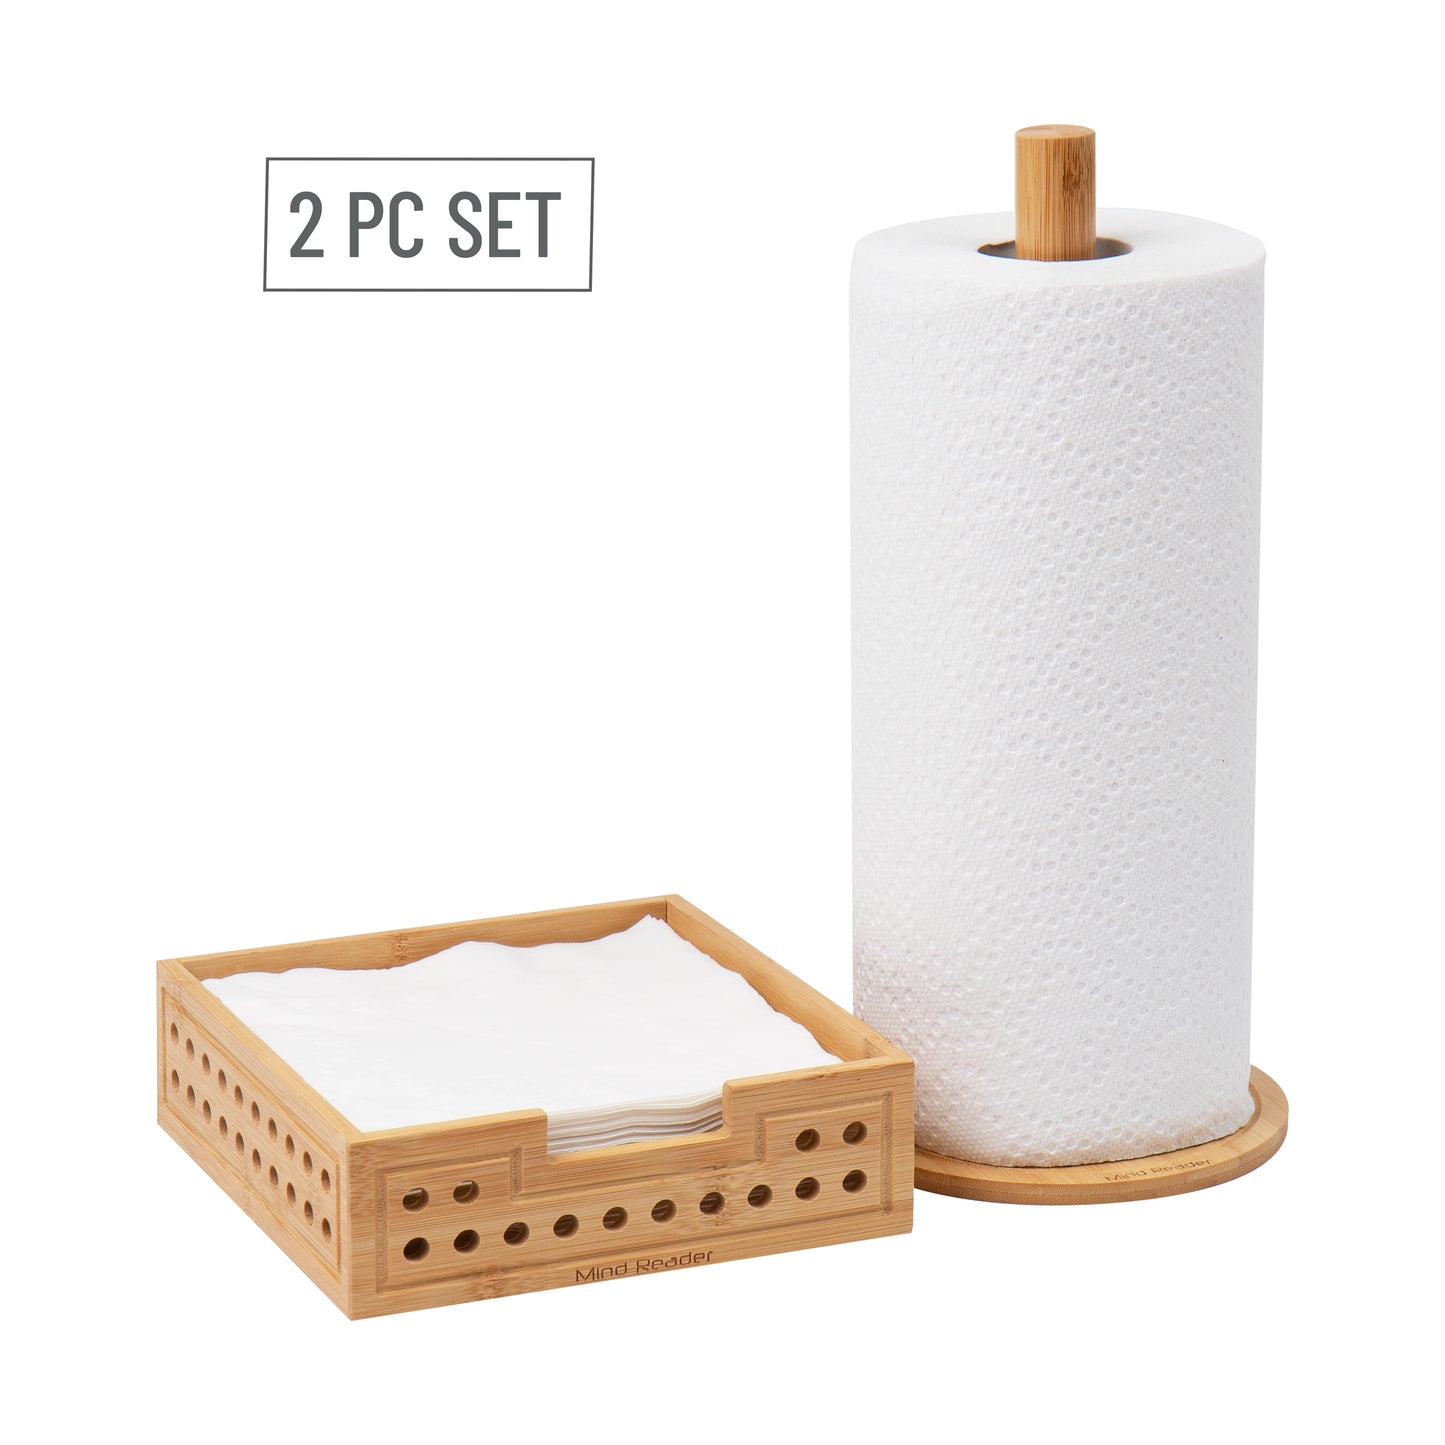 Paper Towel Holder Countertop, Wood Paper Towel Holder Stand